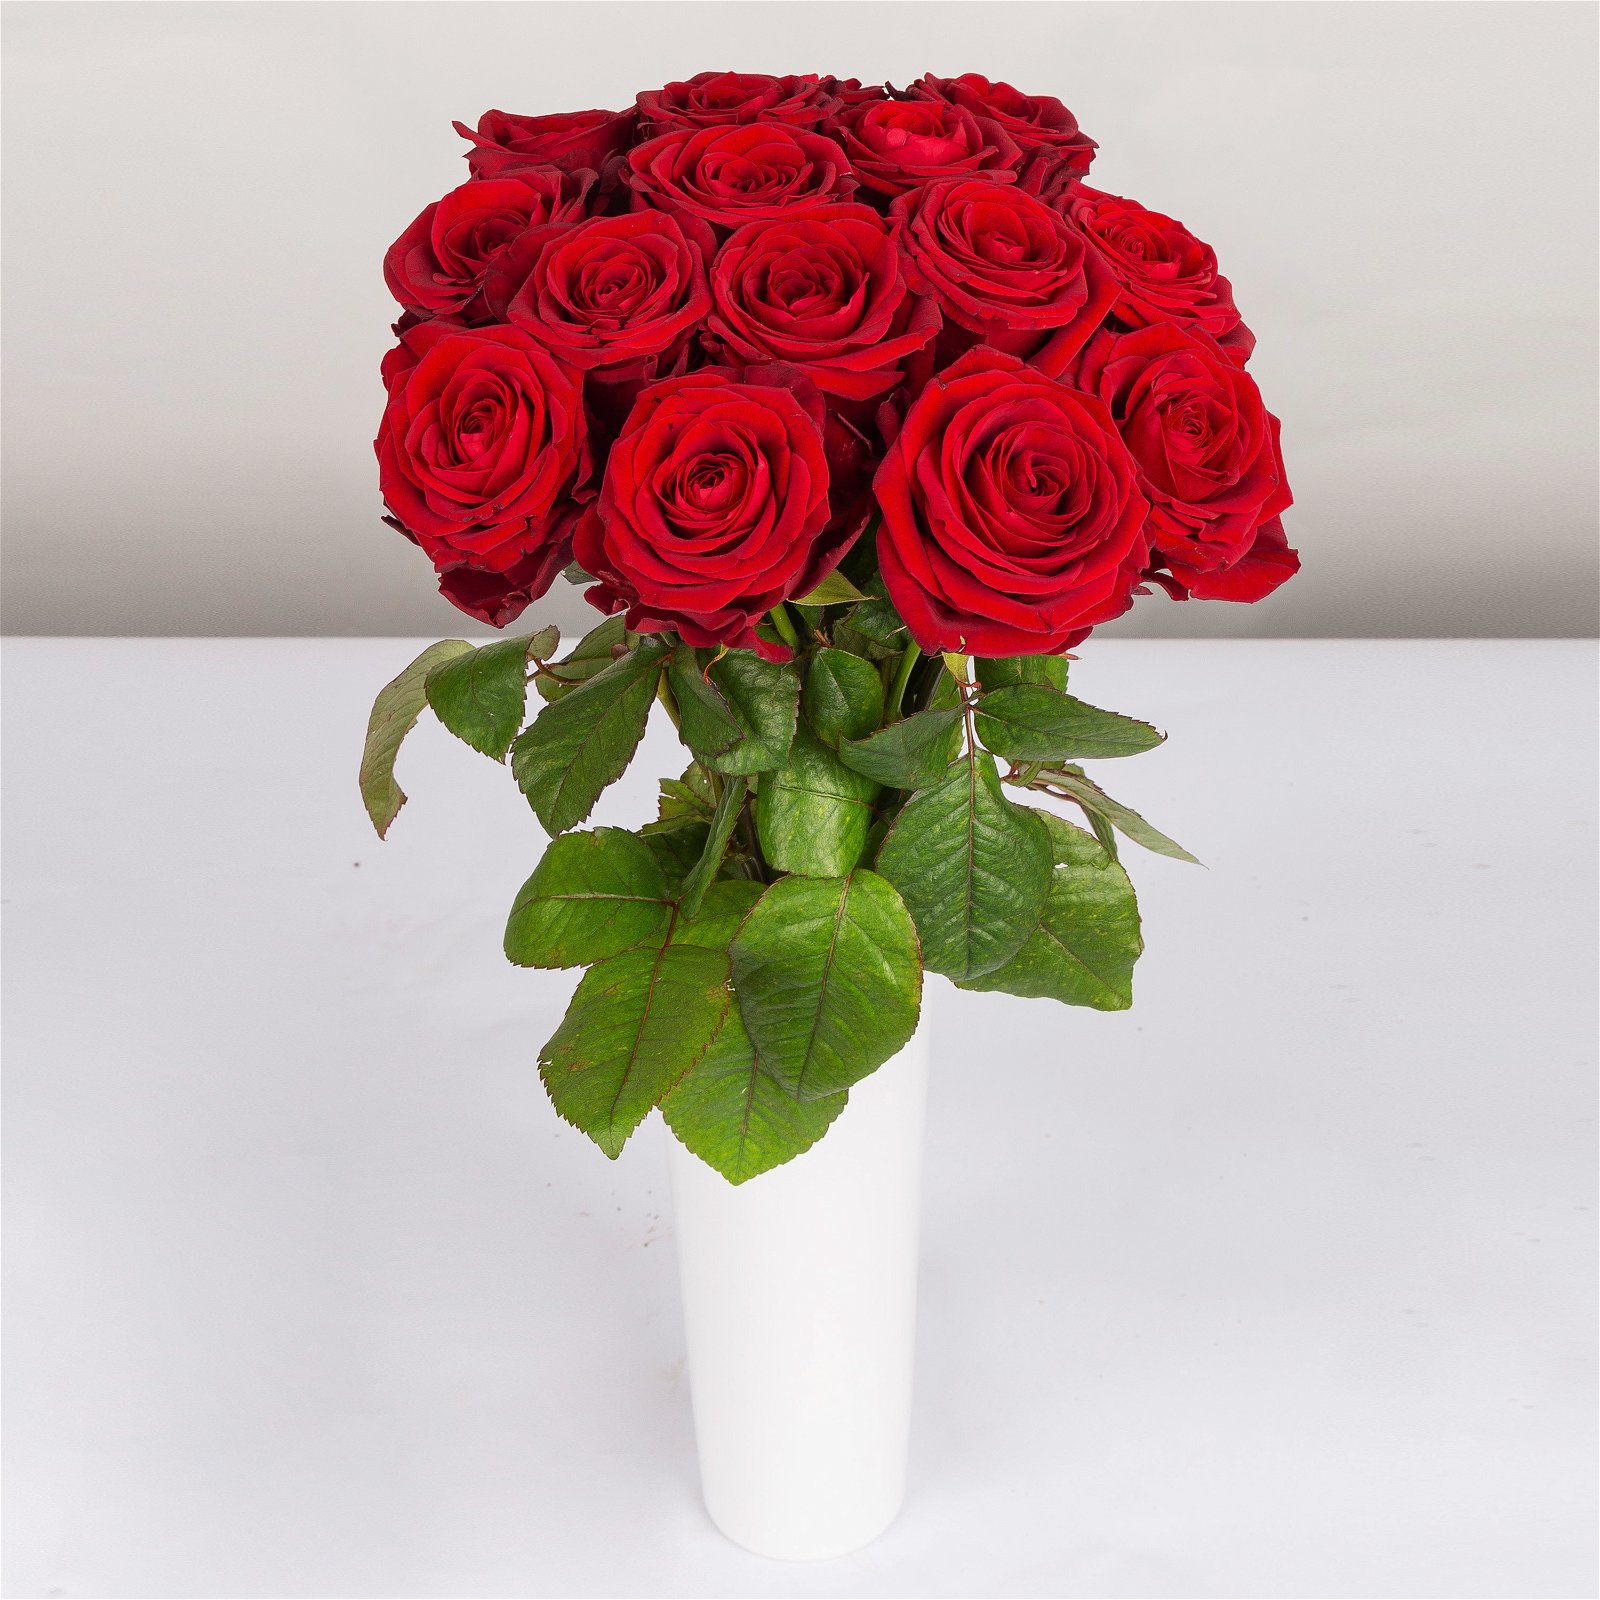 Blumenbund mit Rosen 'Red Naomi', 15er-Bund, rot, inkl. gratis Grußkarte